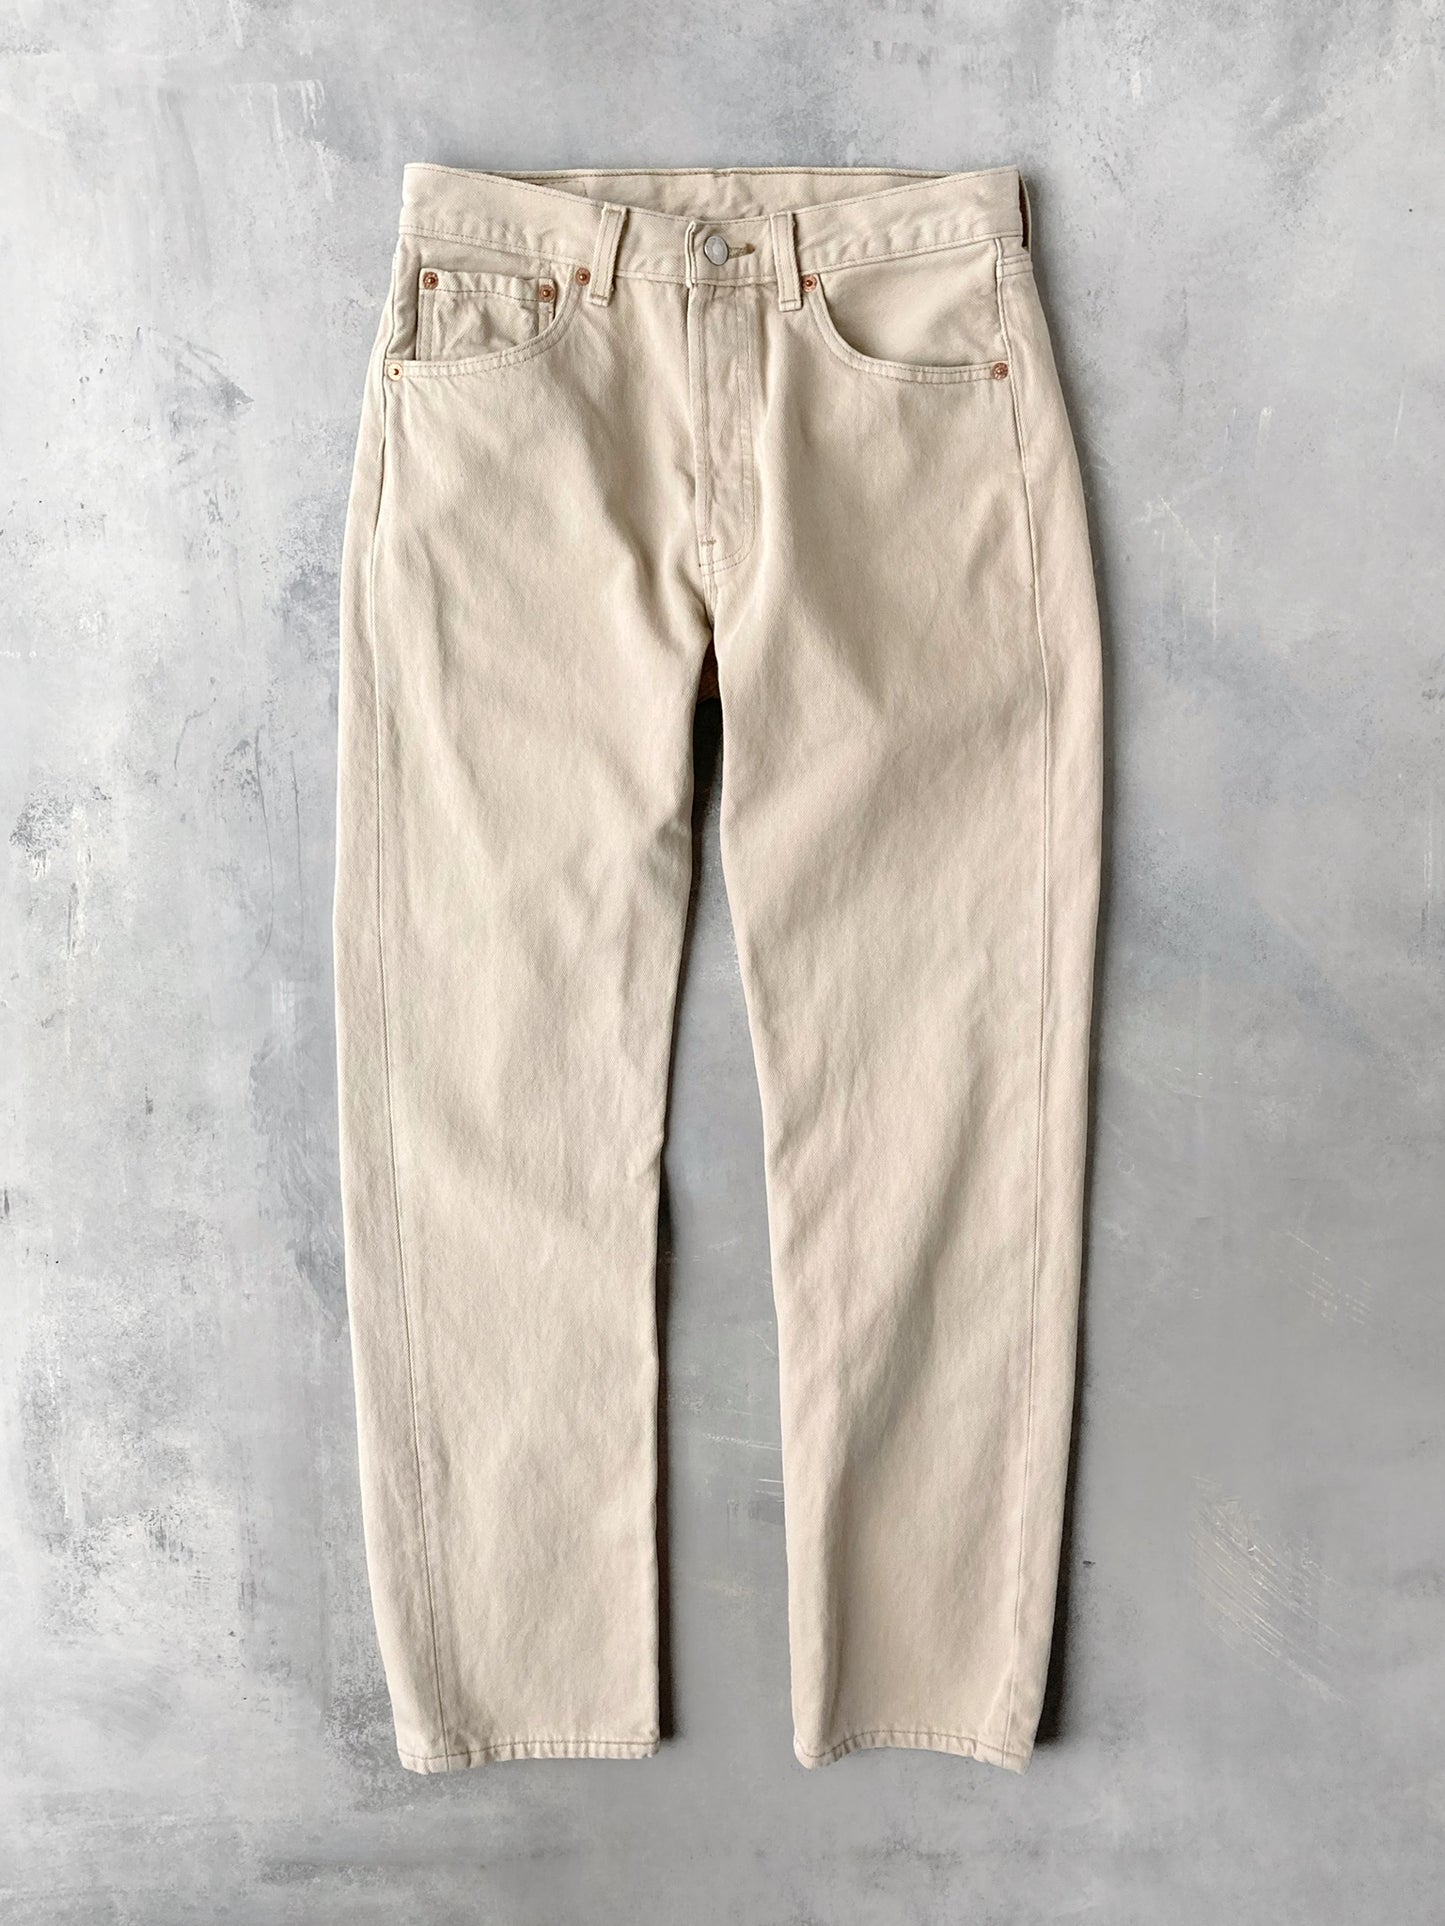 Levi's 501 Tan Jeans 90's - 4 / 6